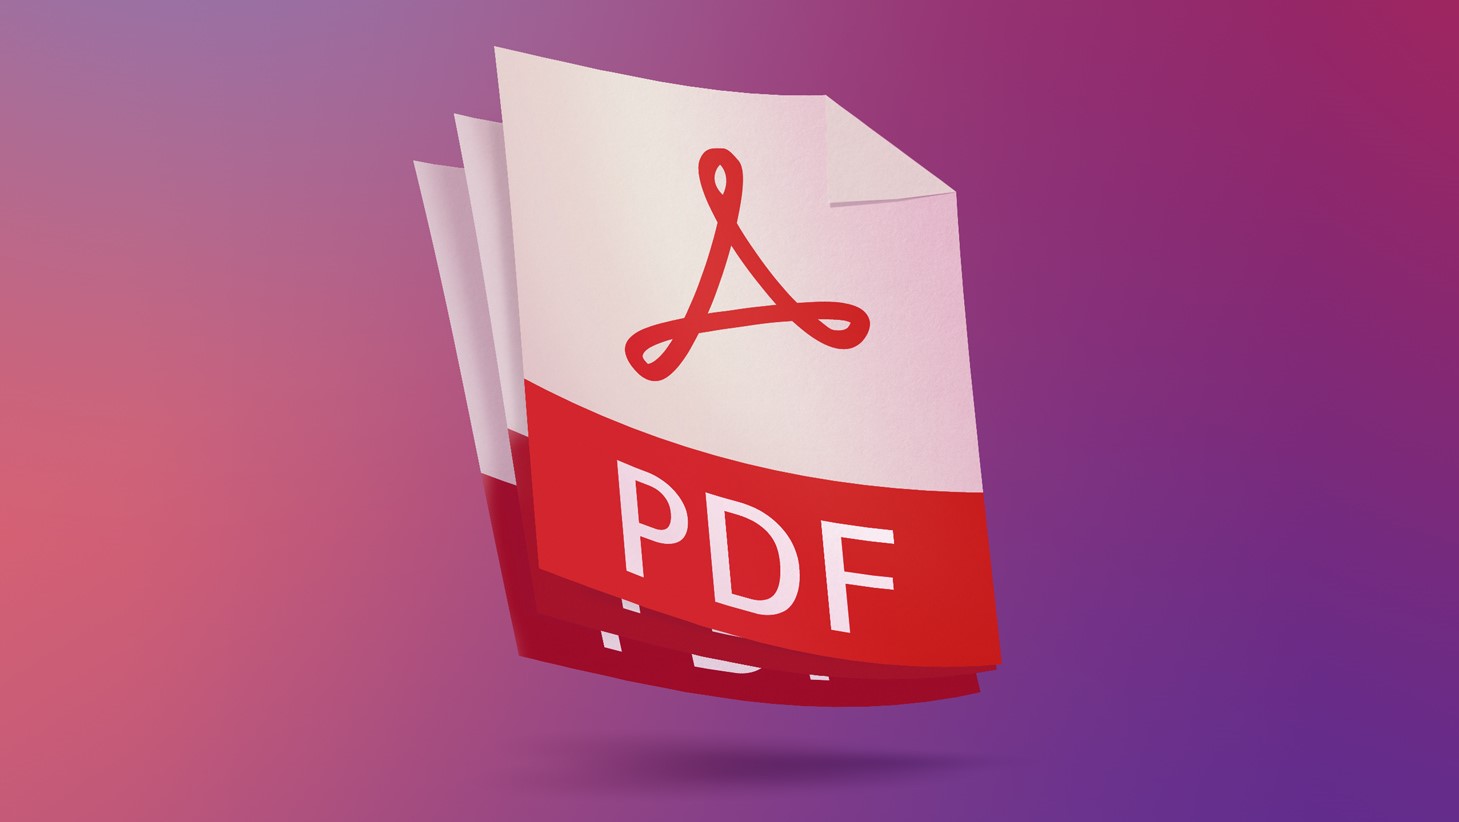 acrobat pdf professional free download